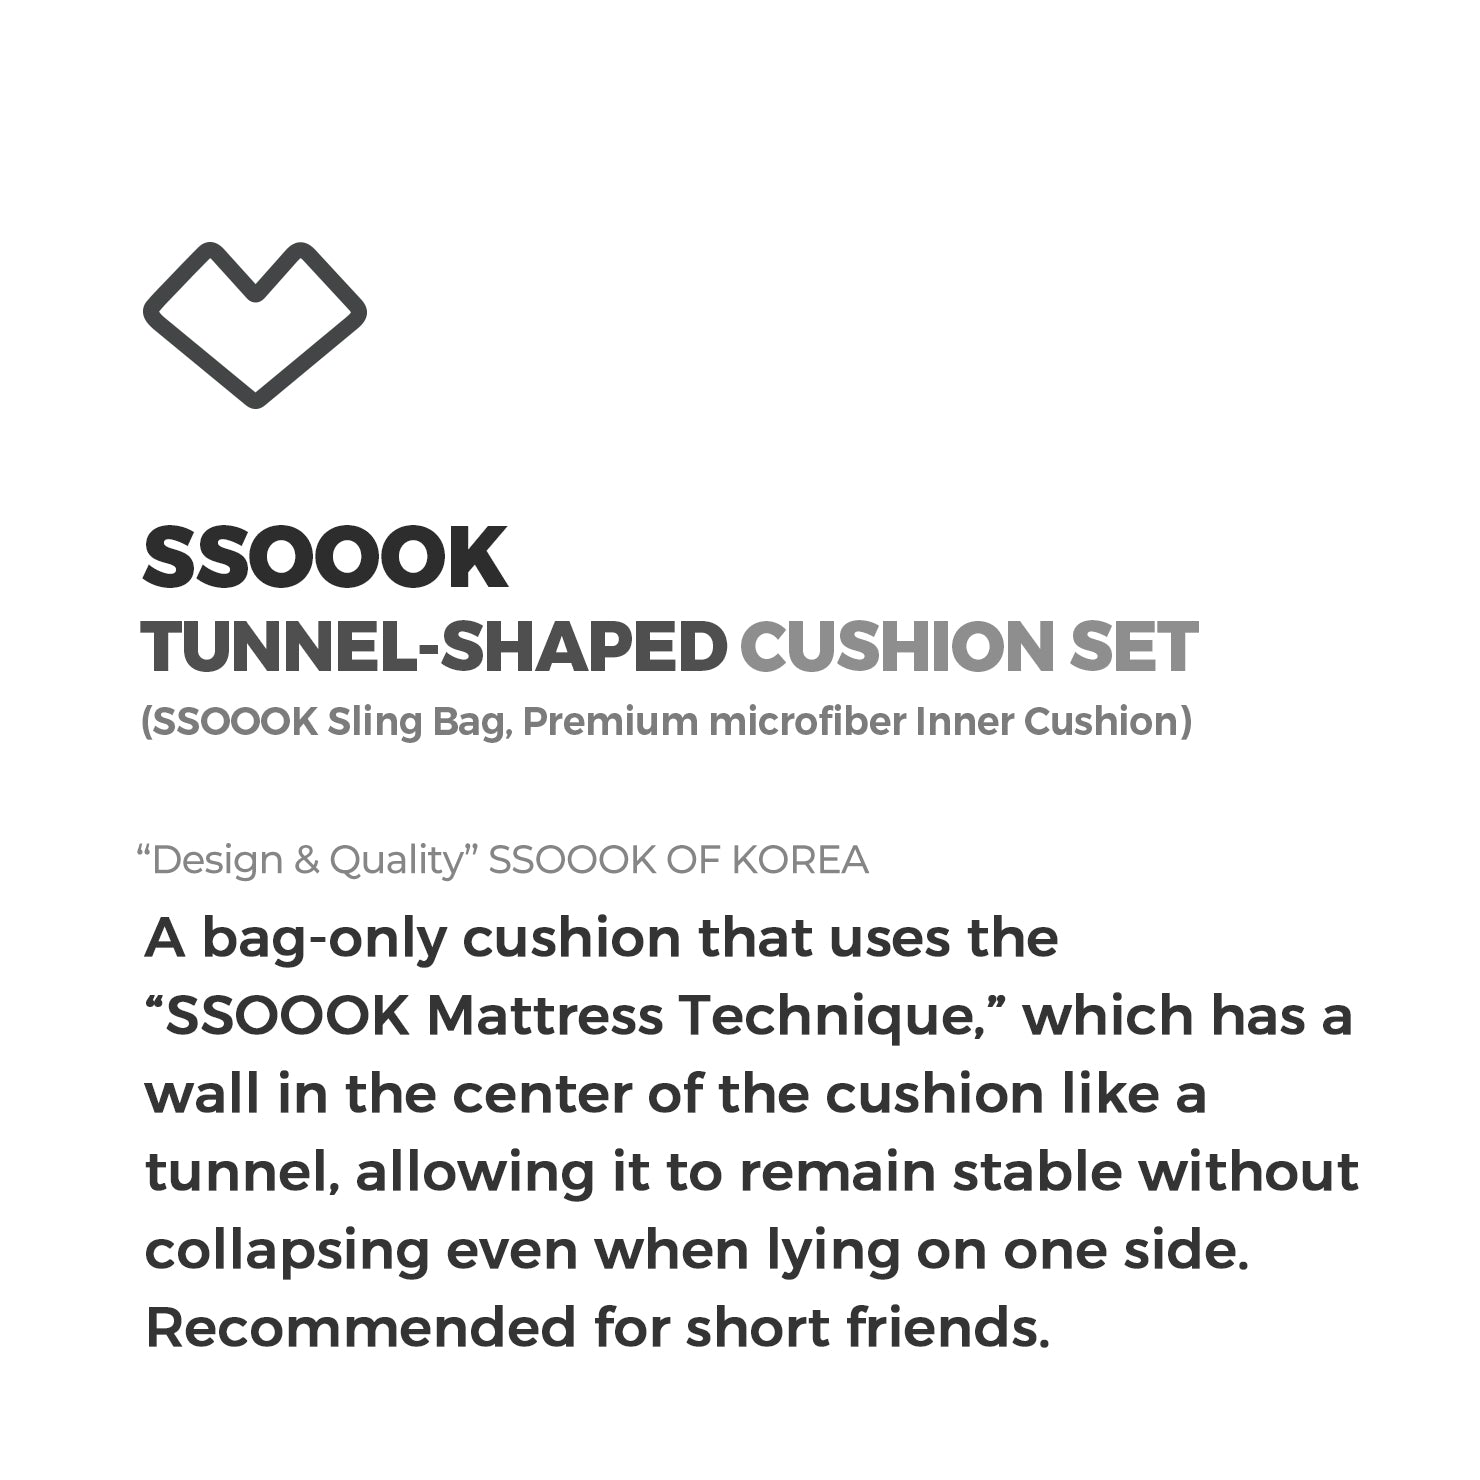 [SO-BD403] SSOOOK Tunnel-Shaped Cushion Set (Sling Bag Microfiber Cushion)